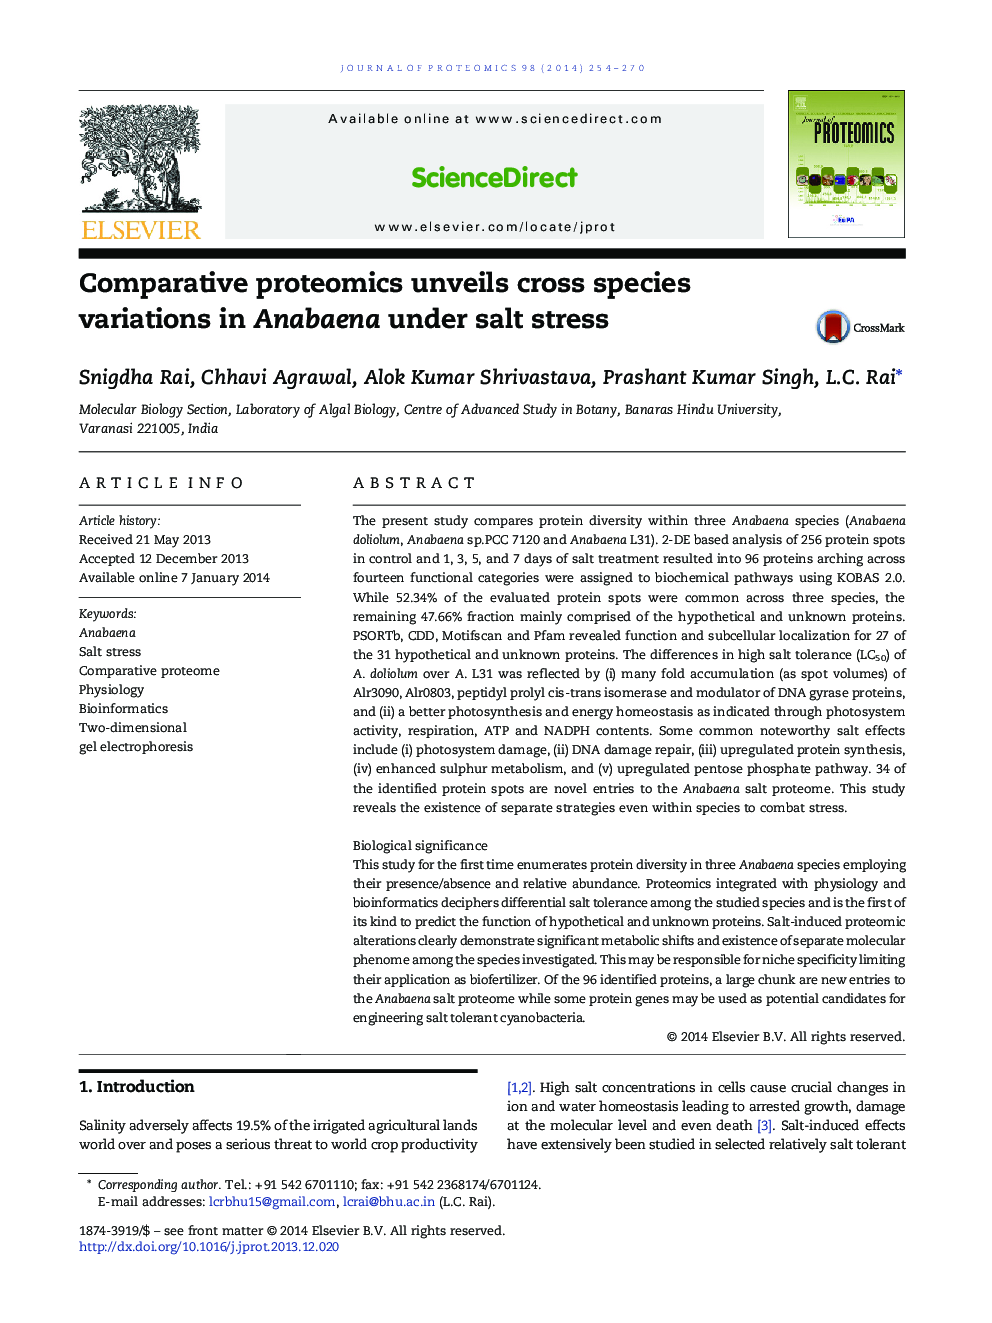 Comparative proteomics unveils cross species variations in Anabaena under salt stress